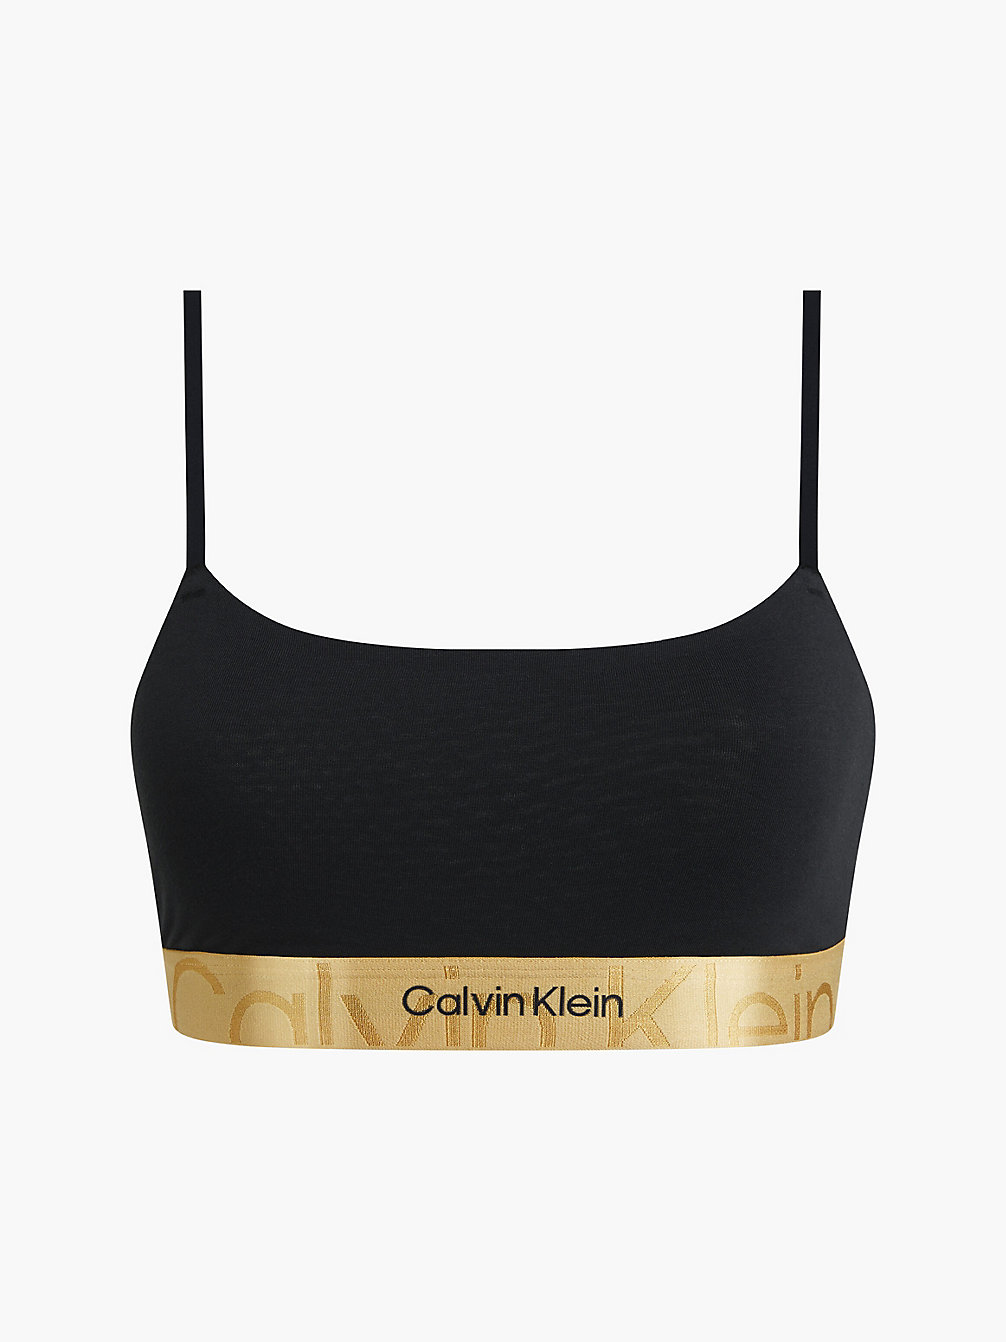 BLACK W. OLD GOLD WSB > Бралетт - Embossed Icon > undefined Женщины - Calvin Klein